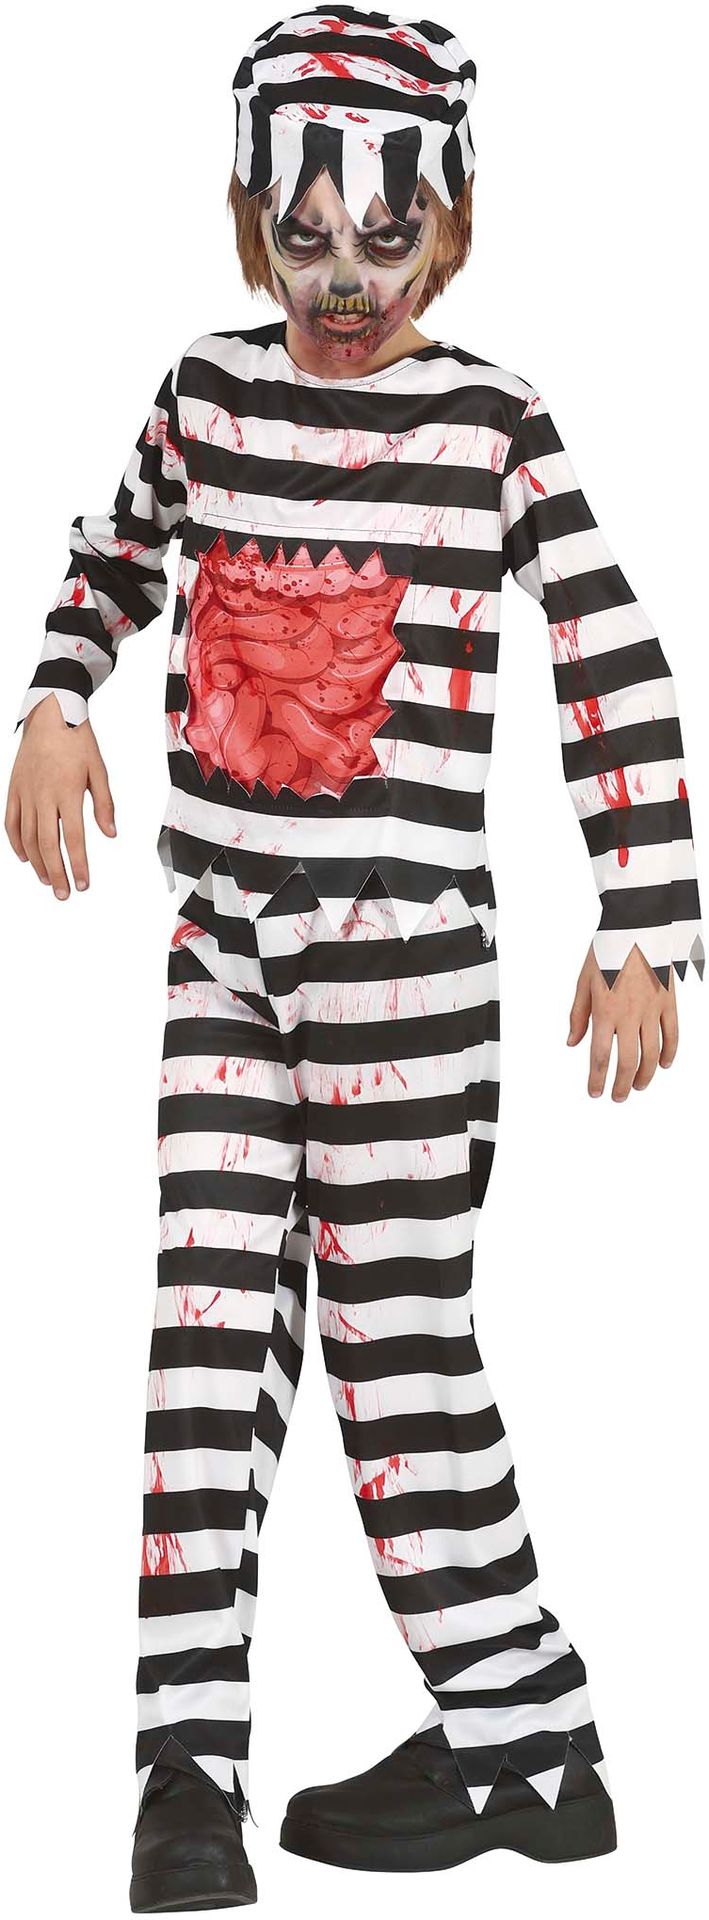 Zombie gevangenis kostuum kind